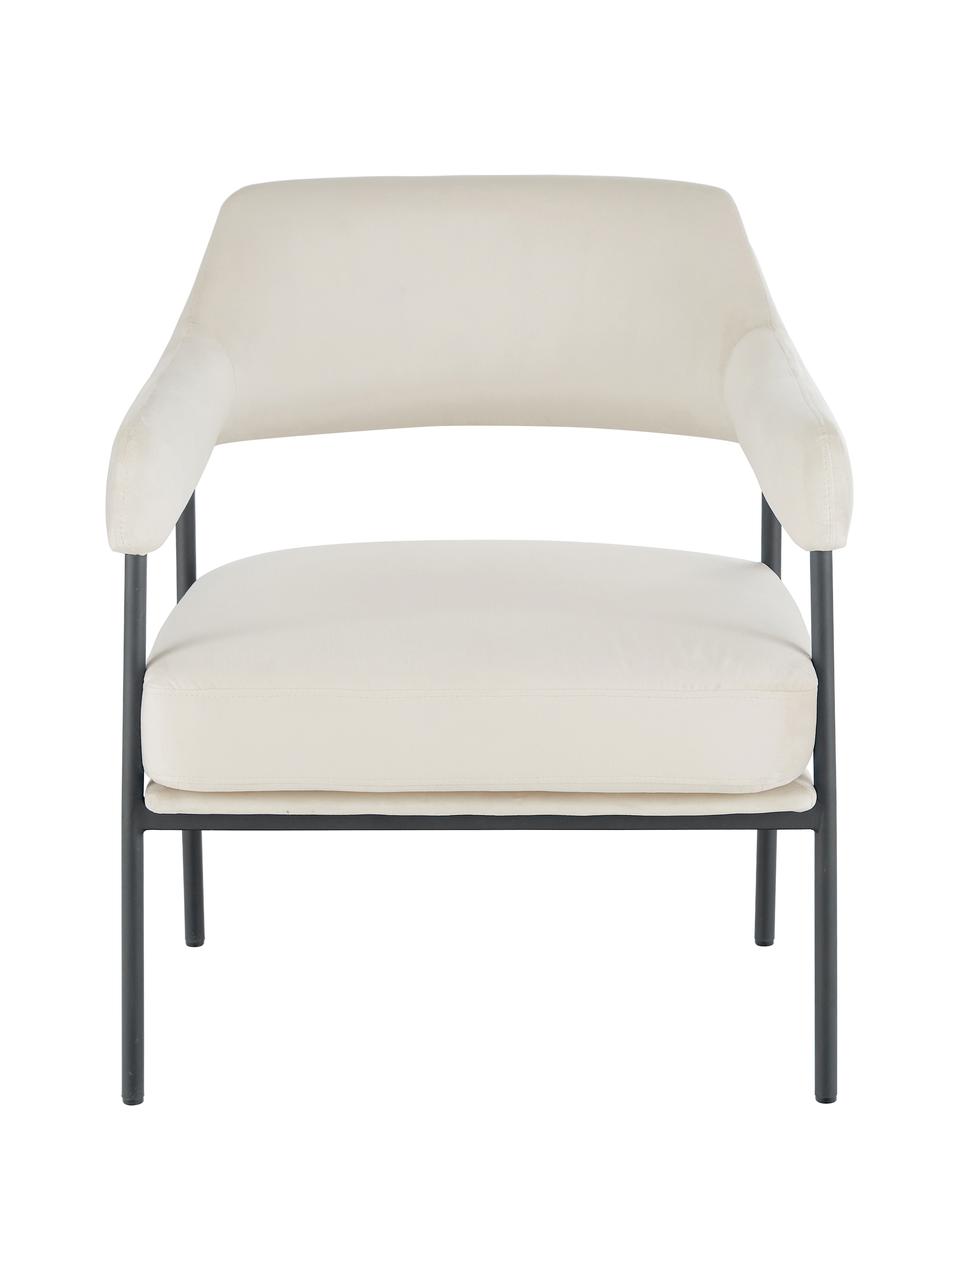 Fluwelen lounge fauteuil Zoe in wit, Bekleding: fluweel (polyester), Frame: gepoedercoat metaal, Teddy crèmewit, B 67  x D 66 cm